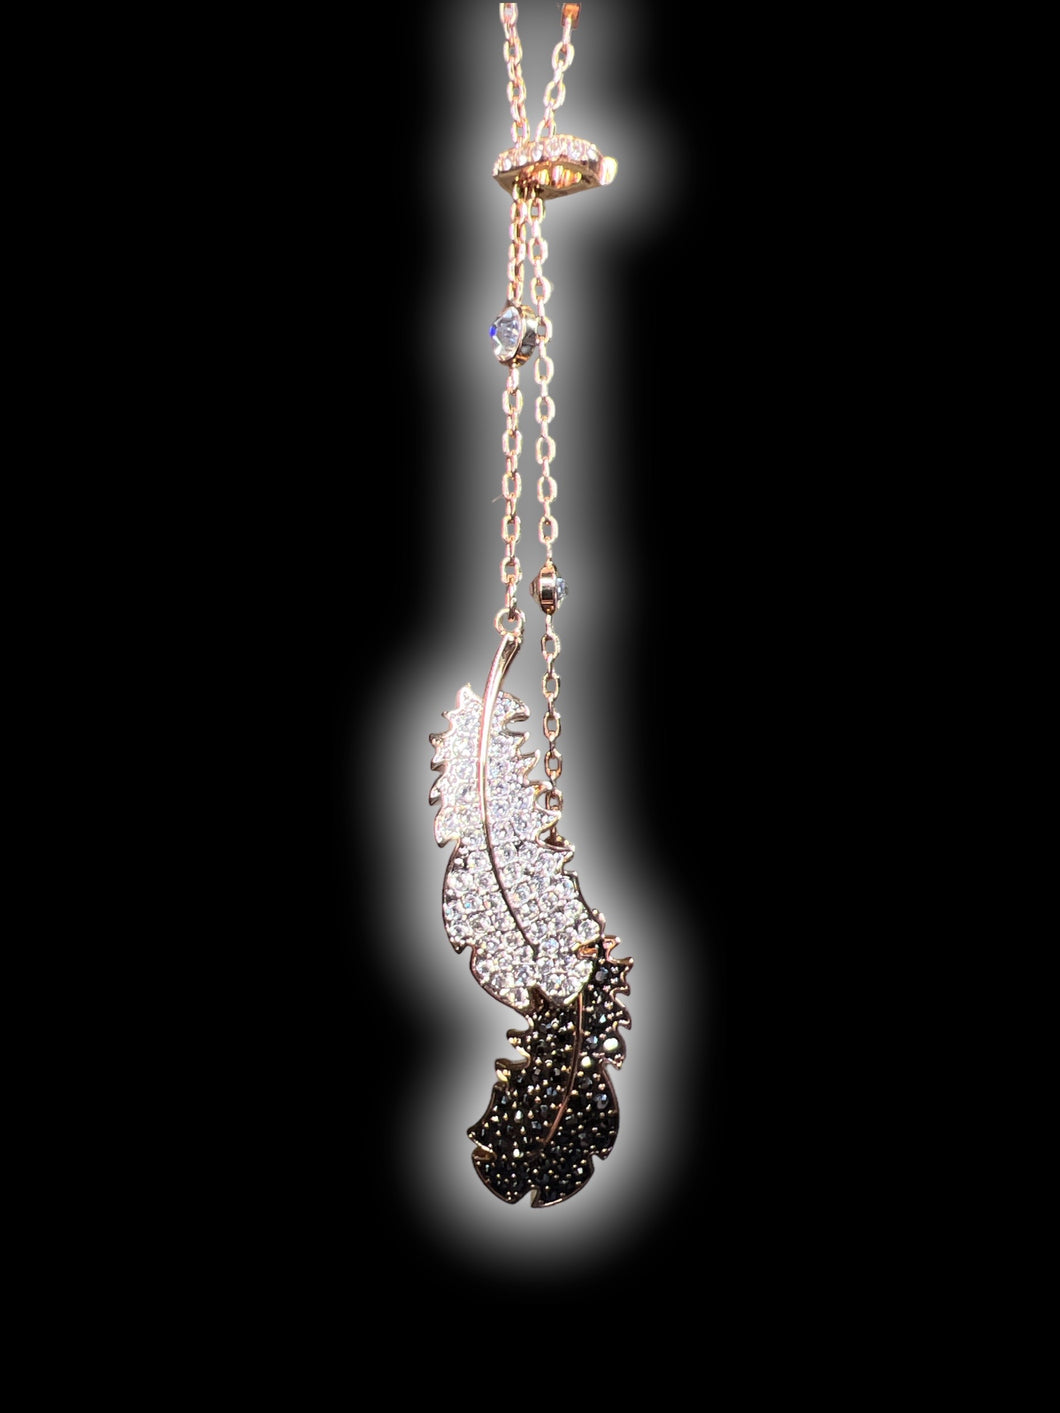 Swarovski’s “Naughty Chandelier” rose gold-like wrap necklace w/ clear & black gem wings